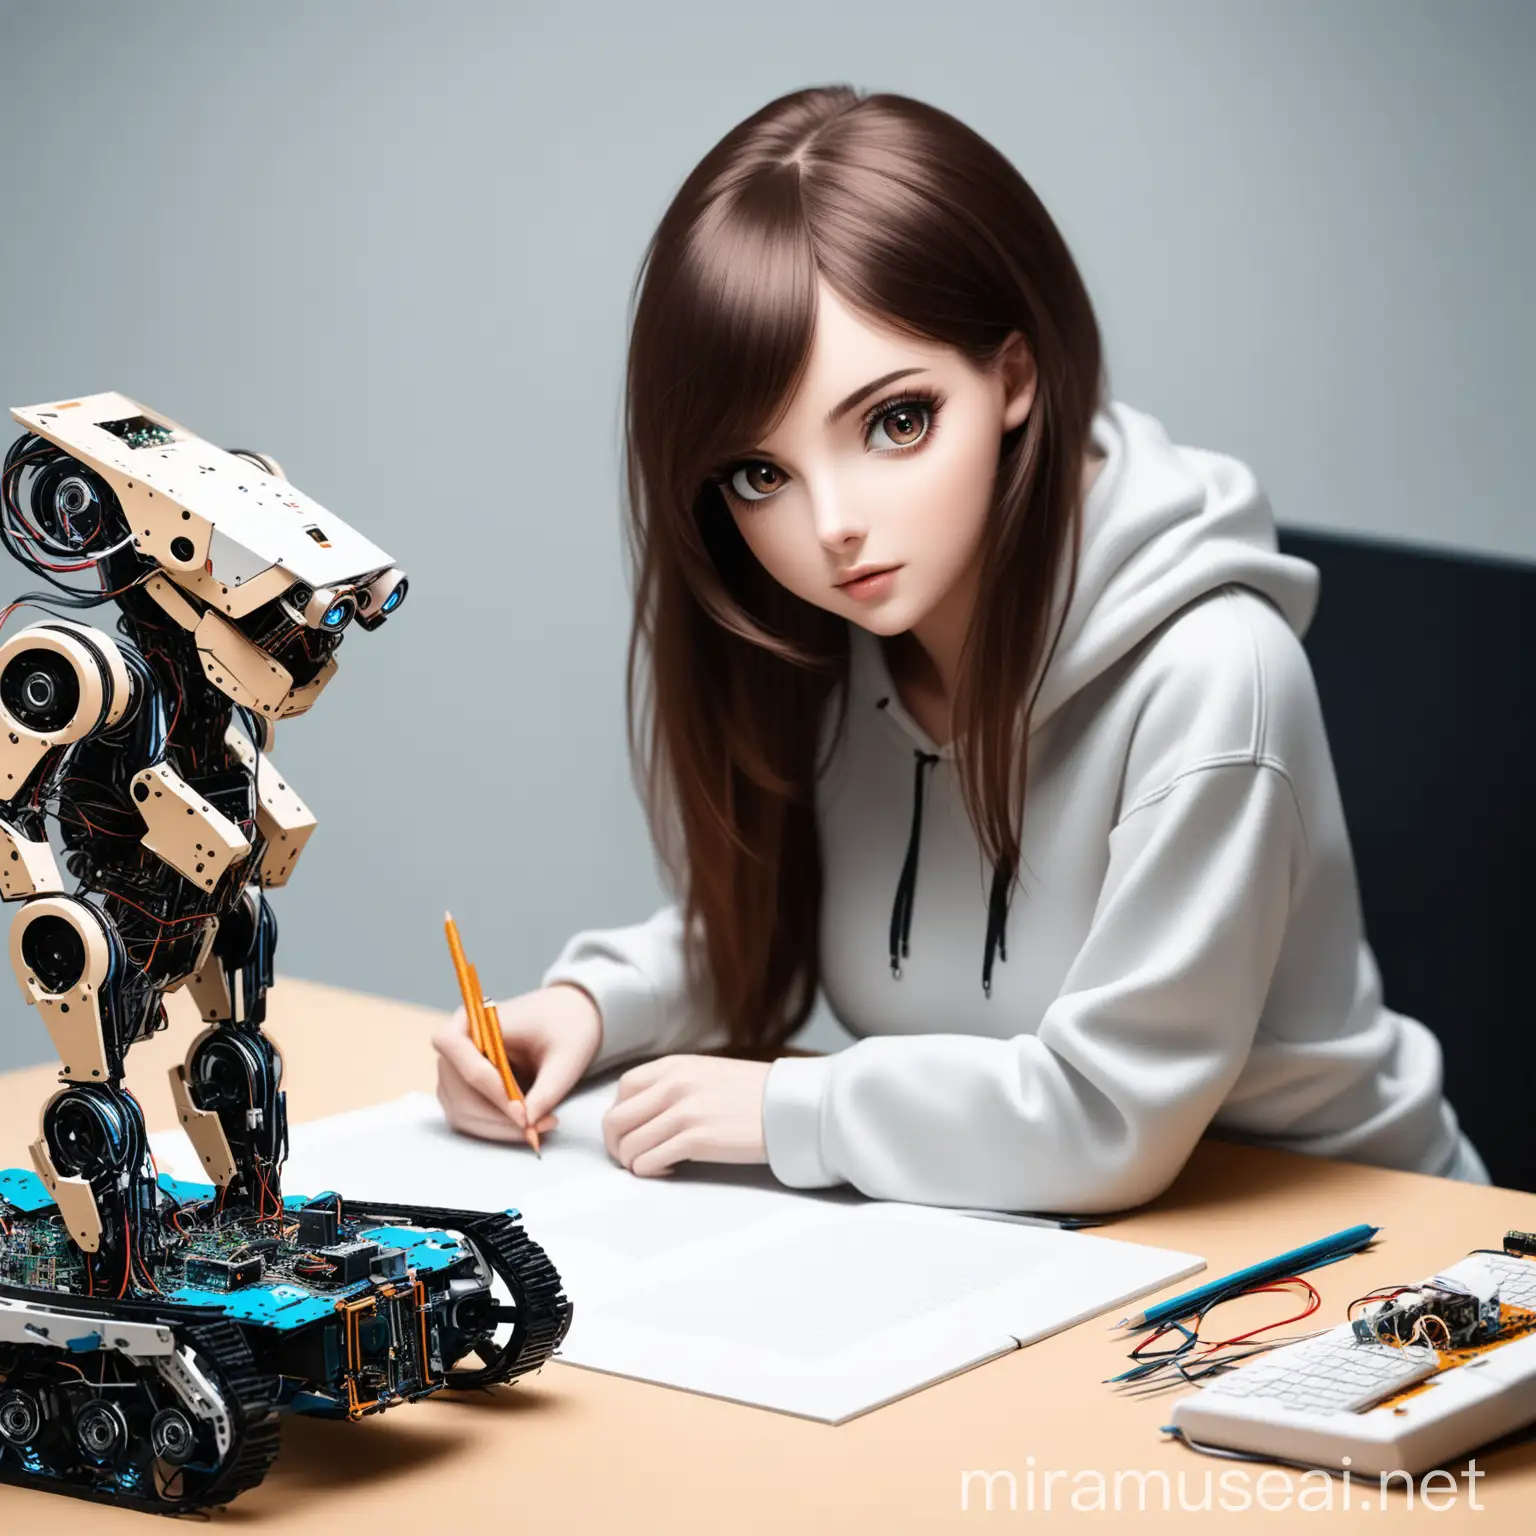 Beautiful Women Studying Robotics with Dark Brown Hair and Hoodie